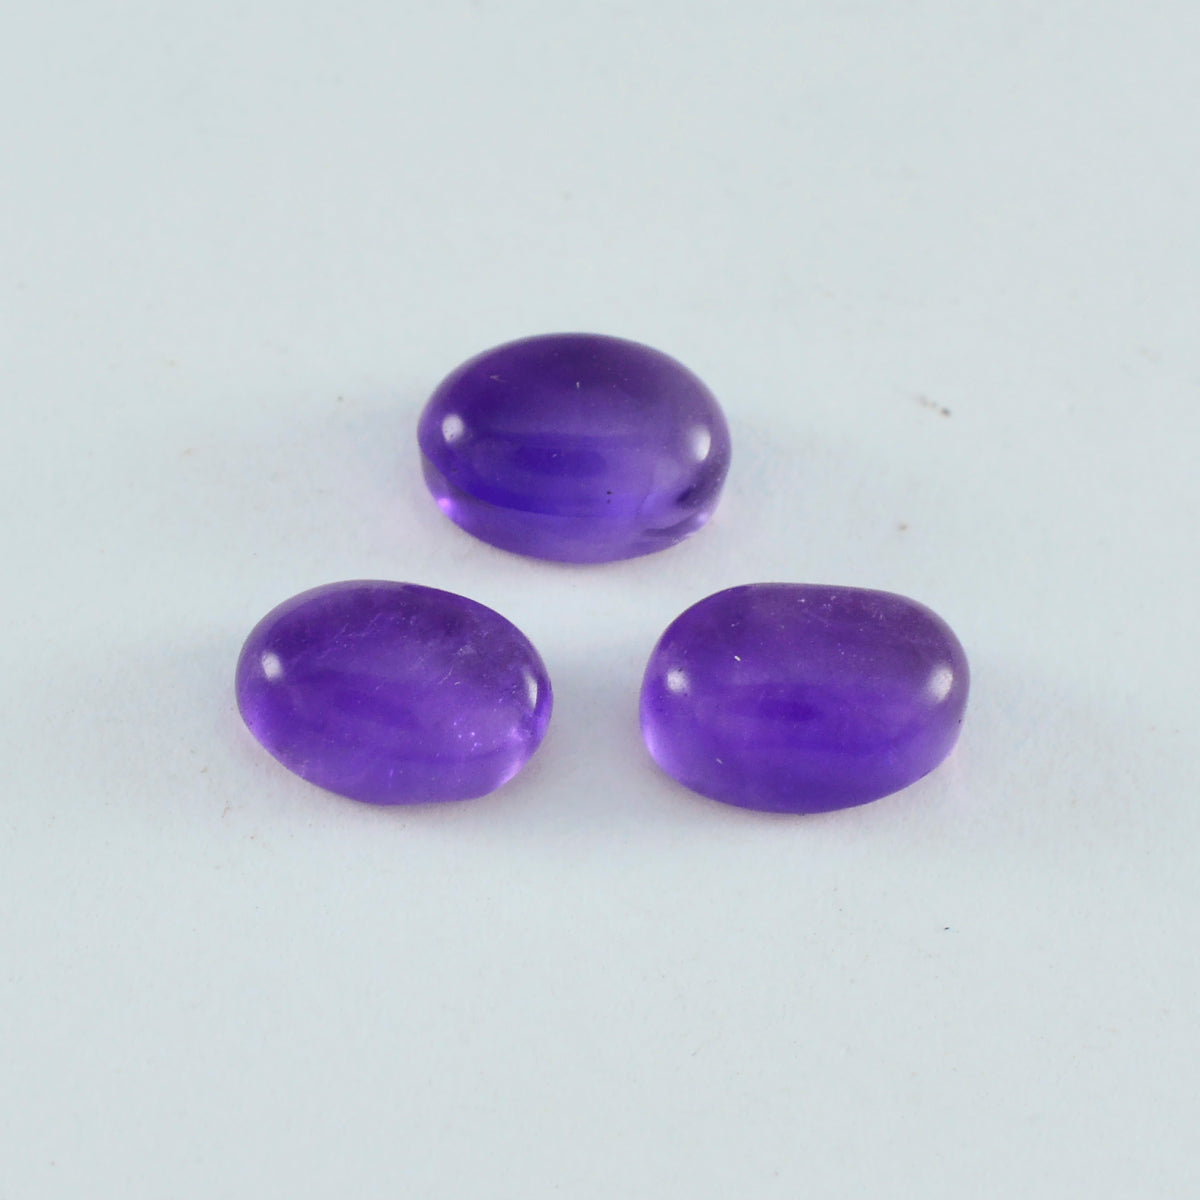 Riyogems 1PC Purple Amethyst Cabochon 7x9 mm Oval Shape attractive Quality Loose Gems